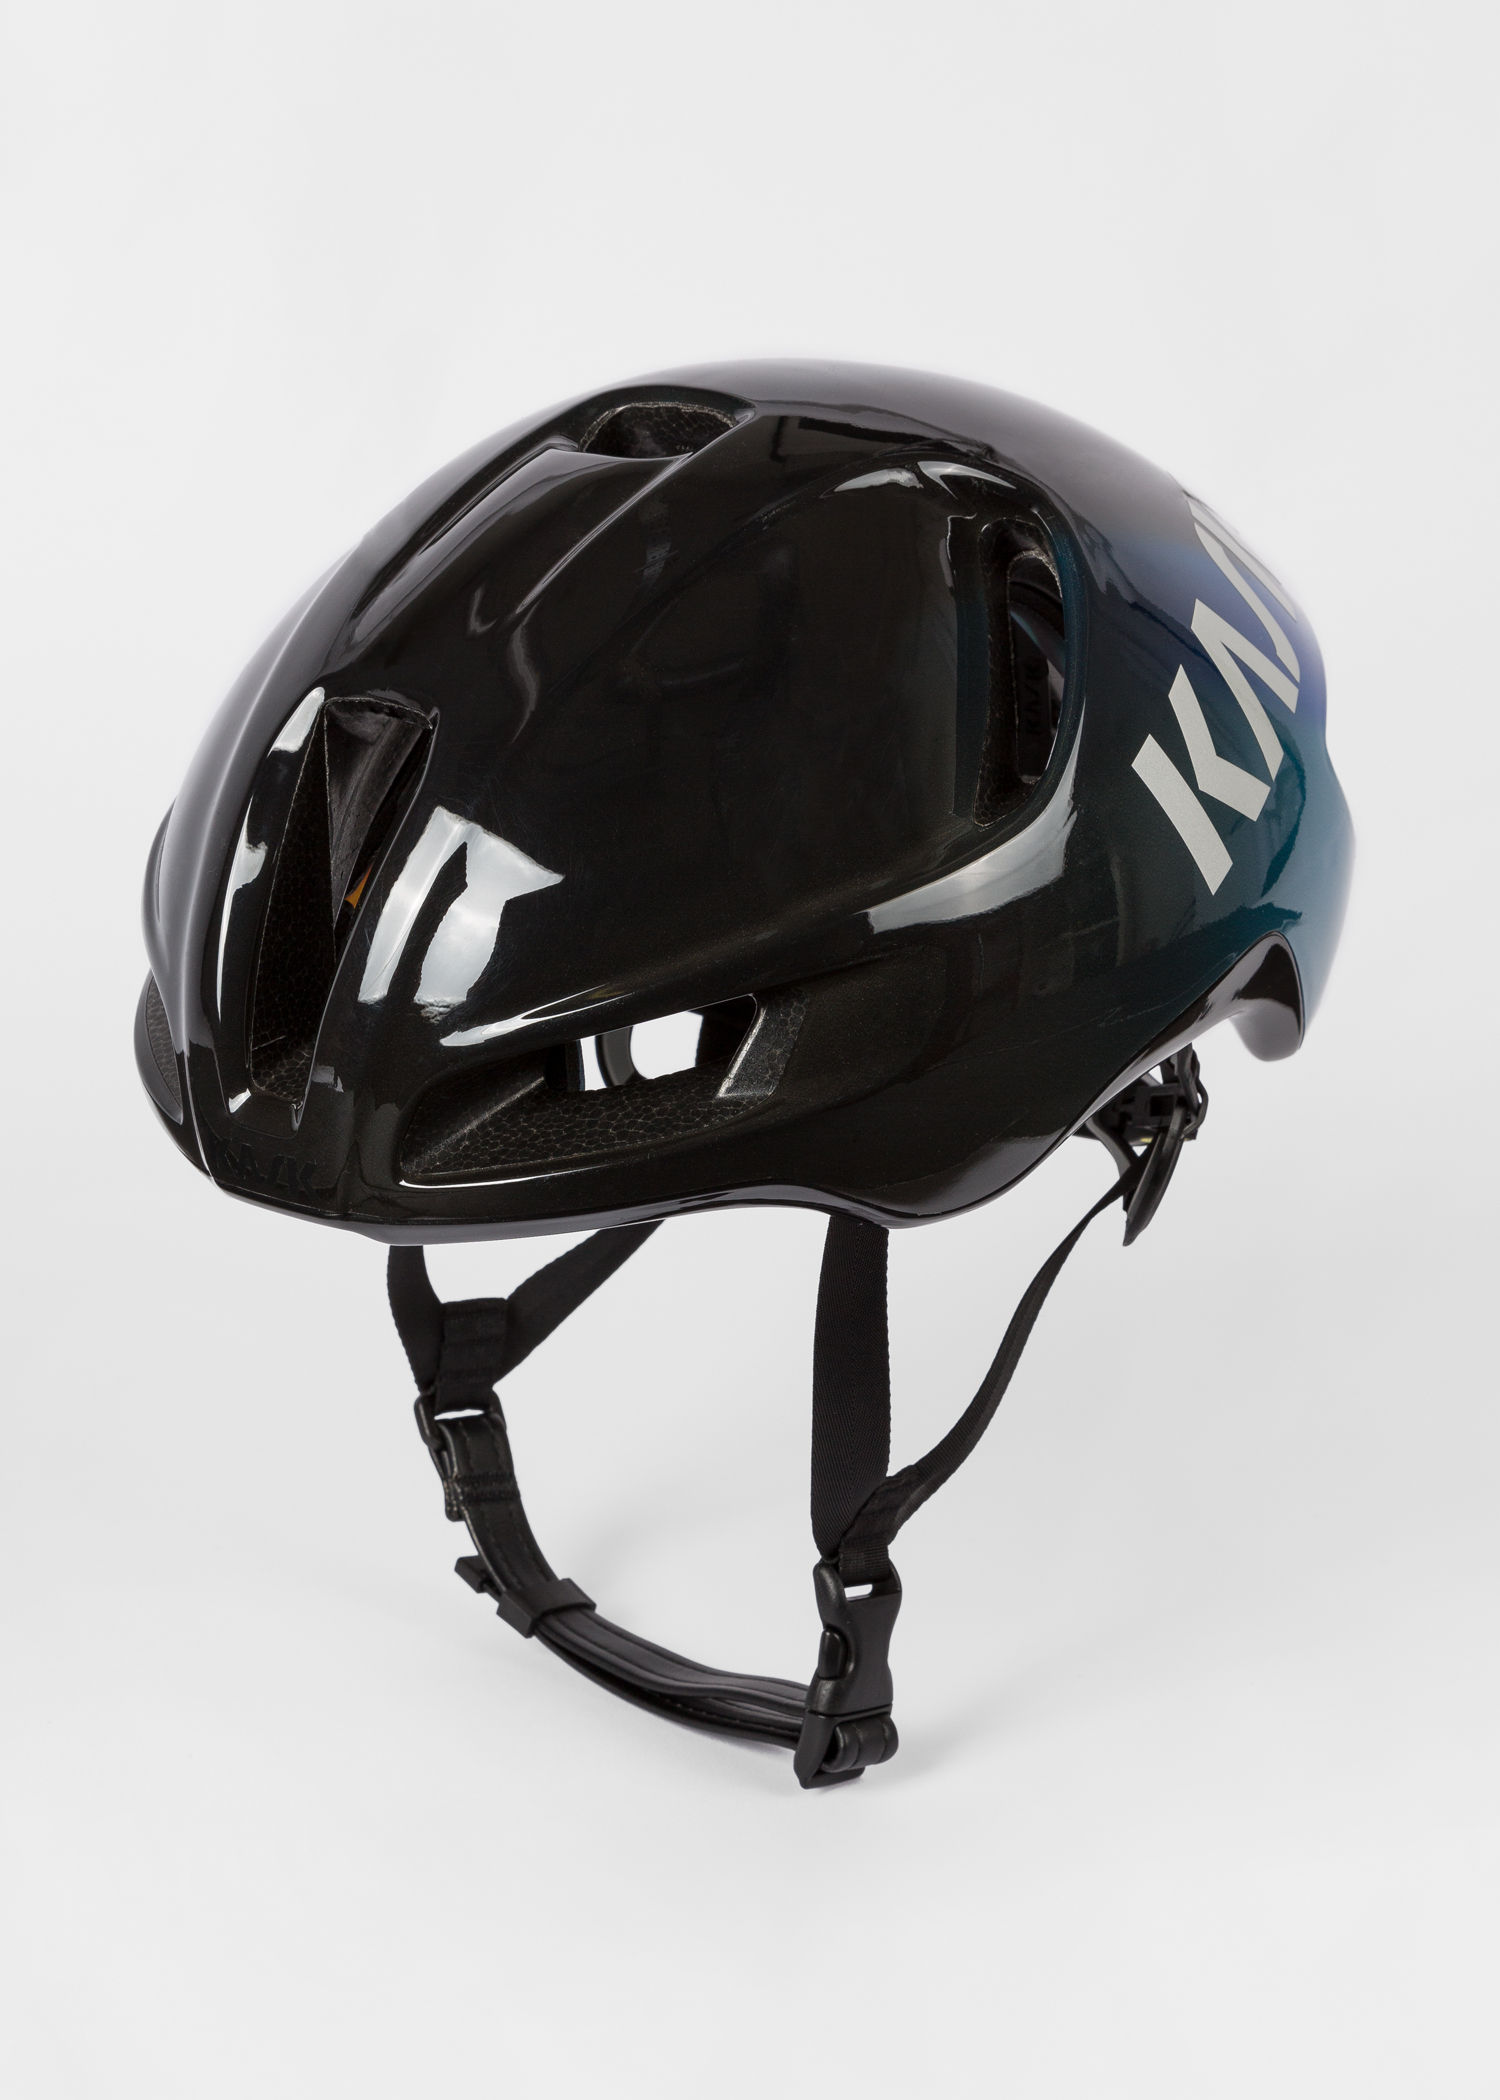 Paul Smith + Kask 'Rainbow Stripe' Utopia Cycling Helmet - Paul Smith